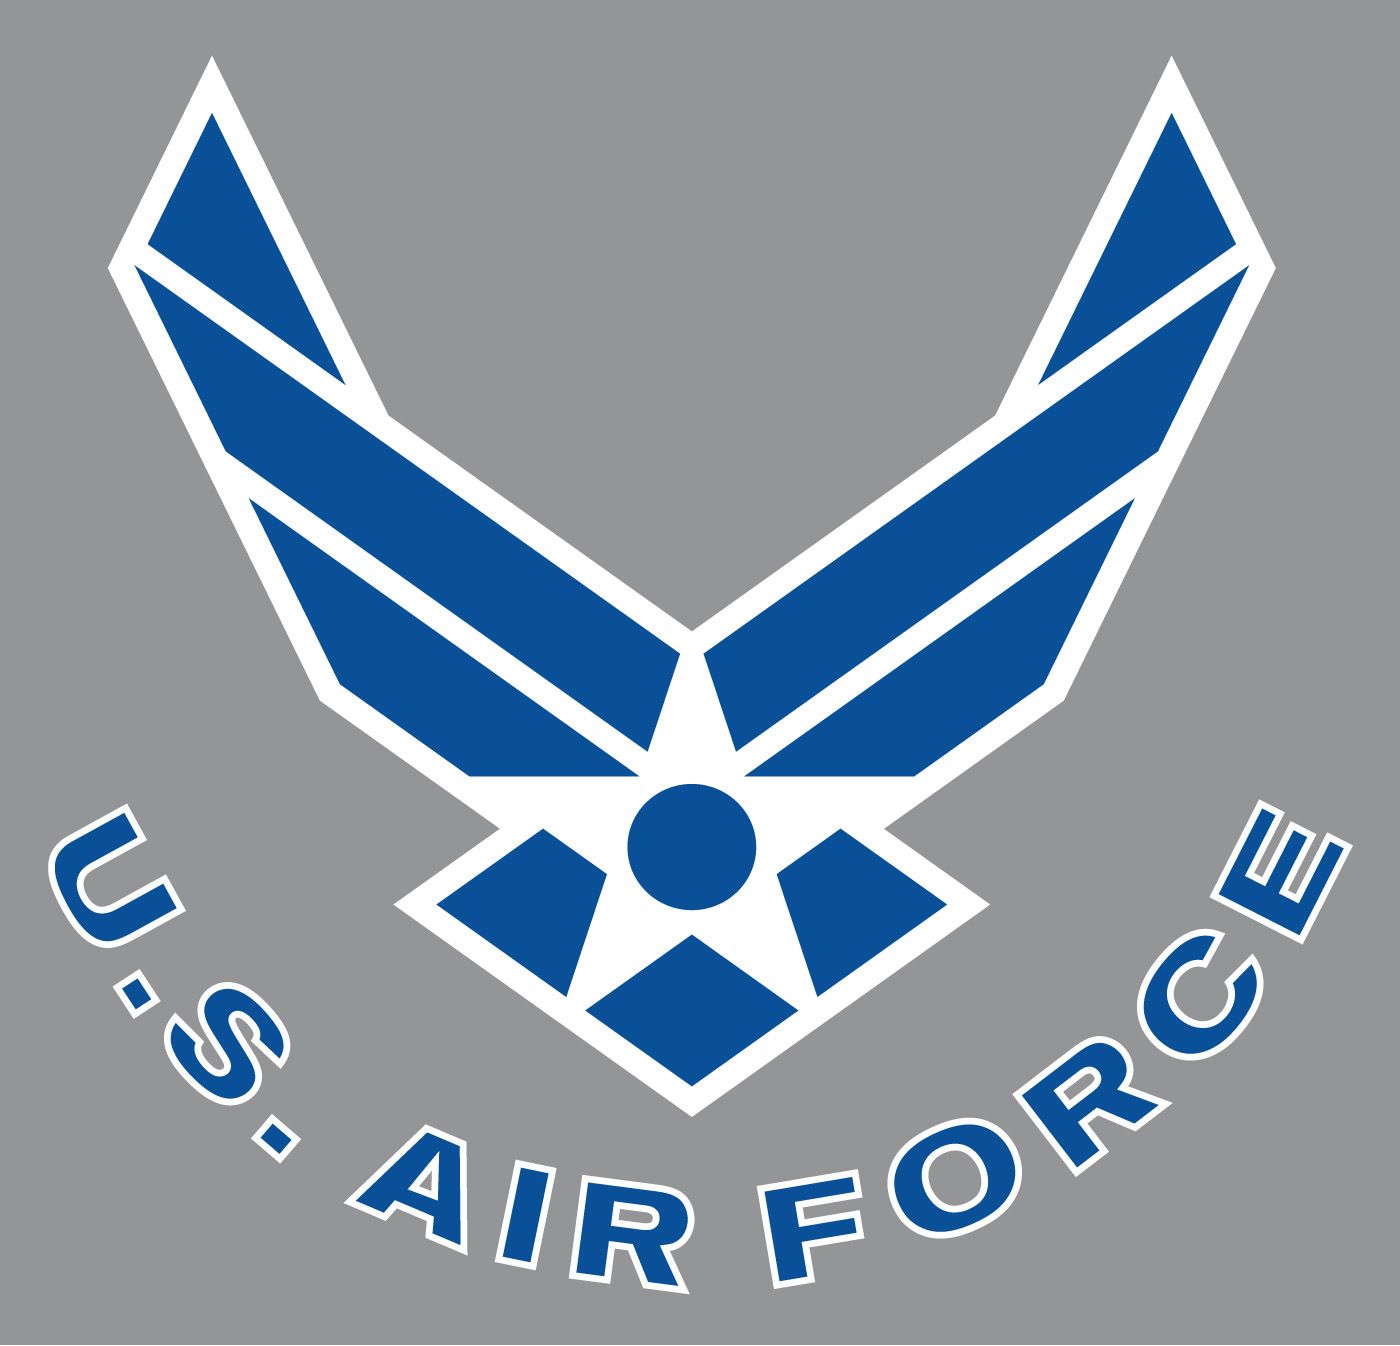 Air force emblems clipart 5 » Clipart Station.